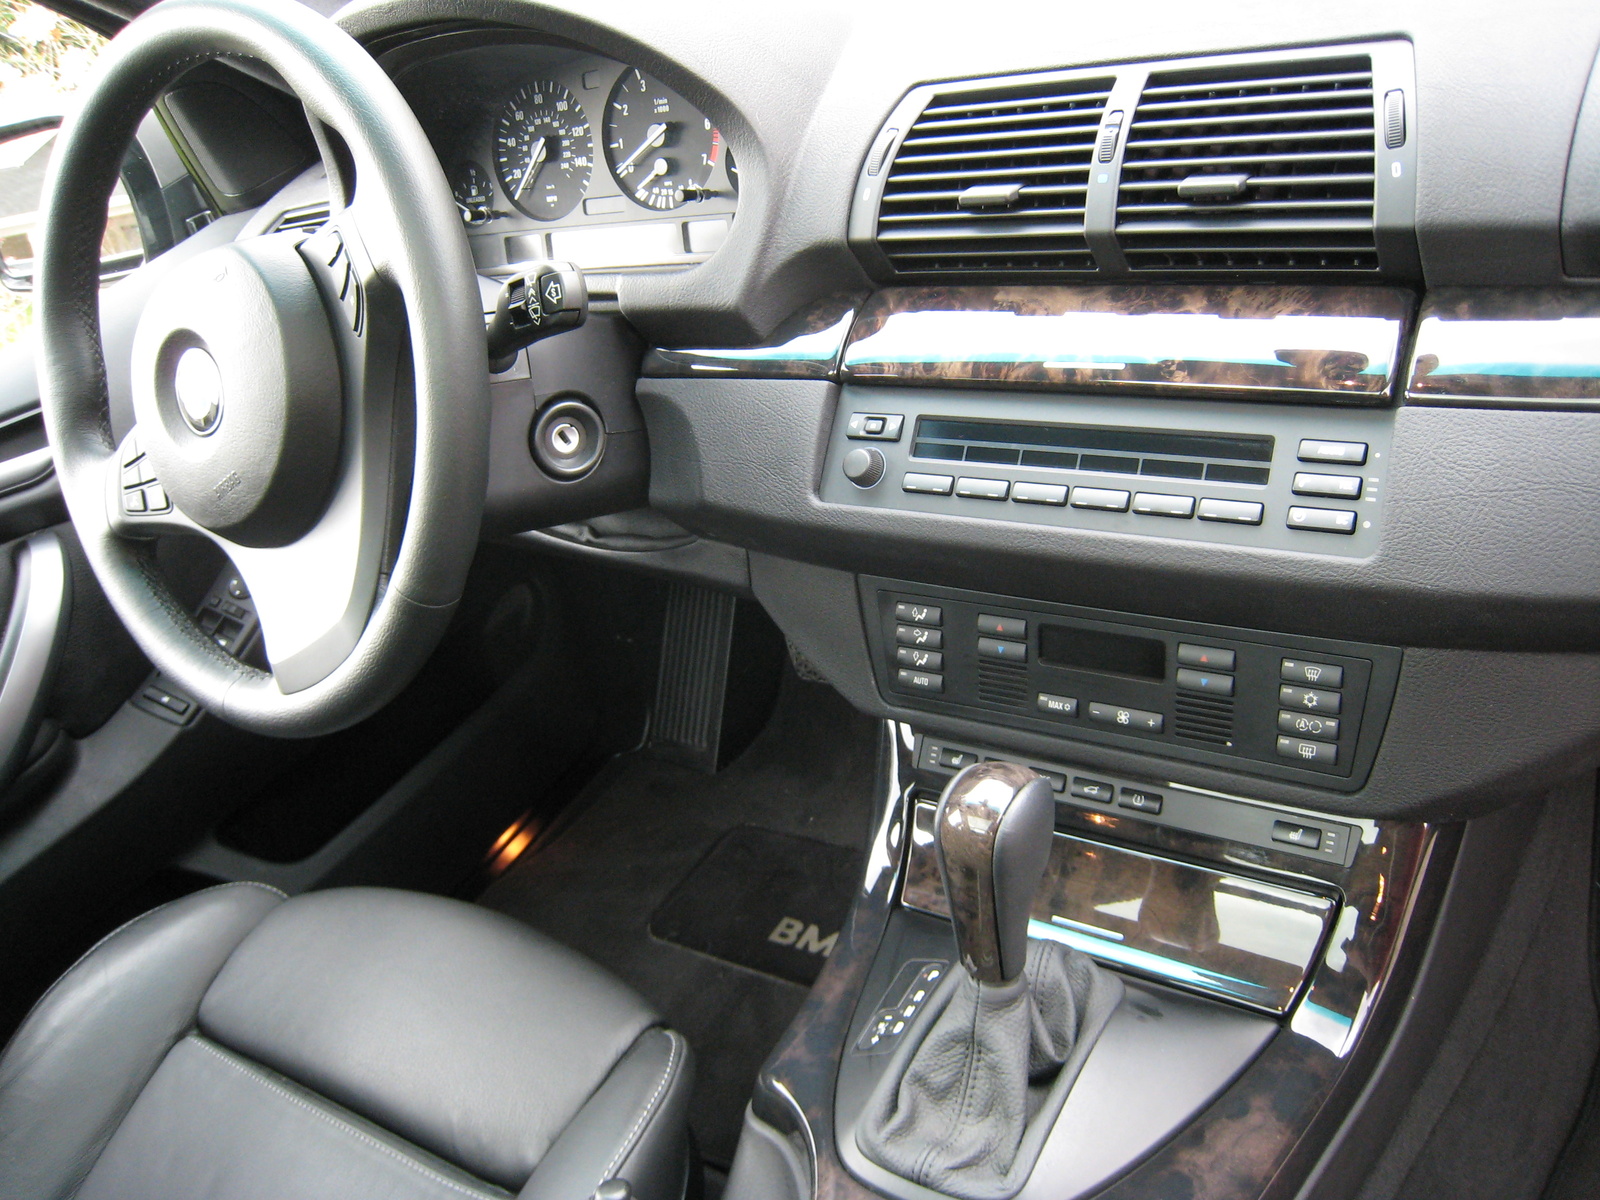 BMW x5 2004 Interior